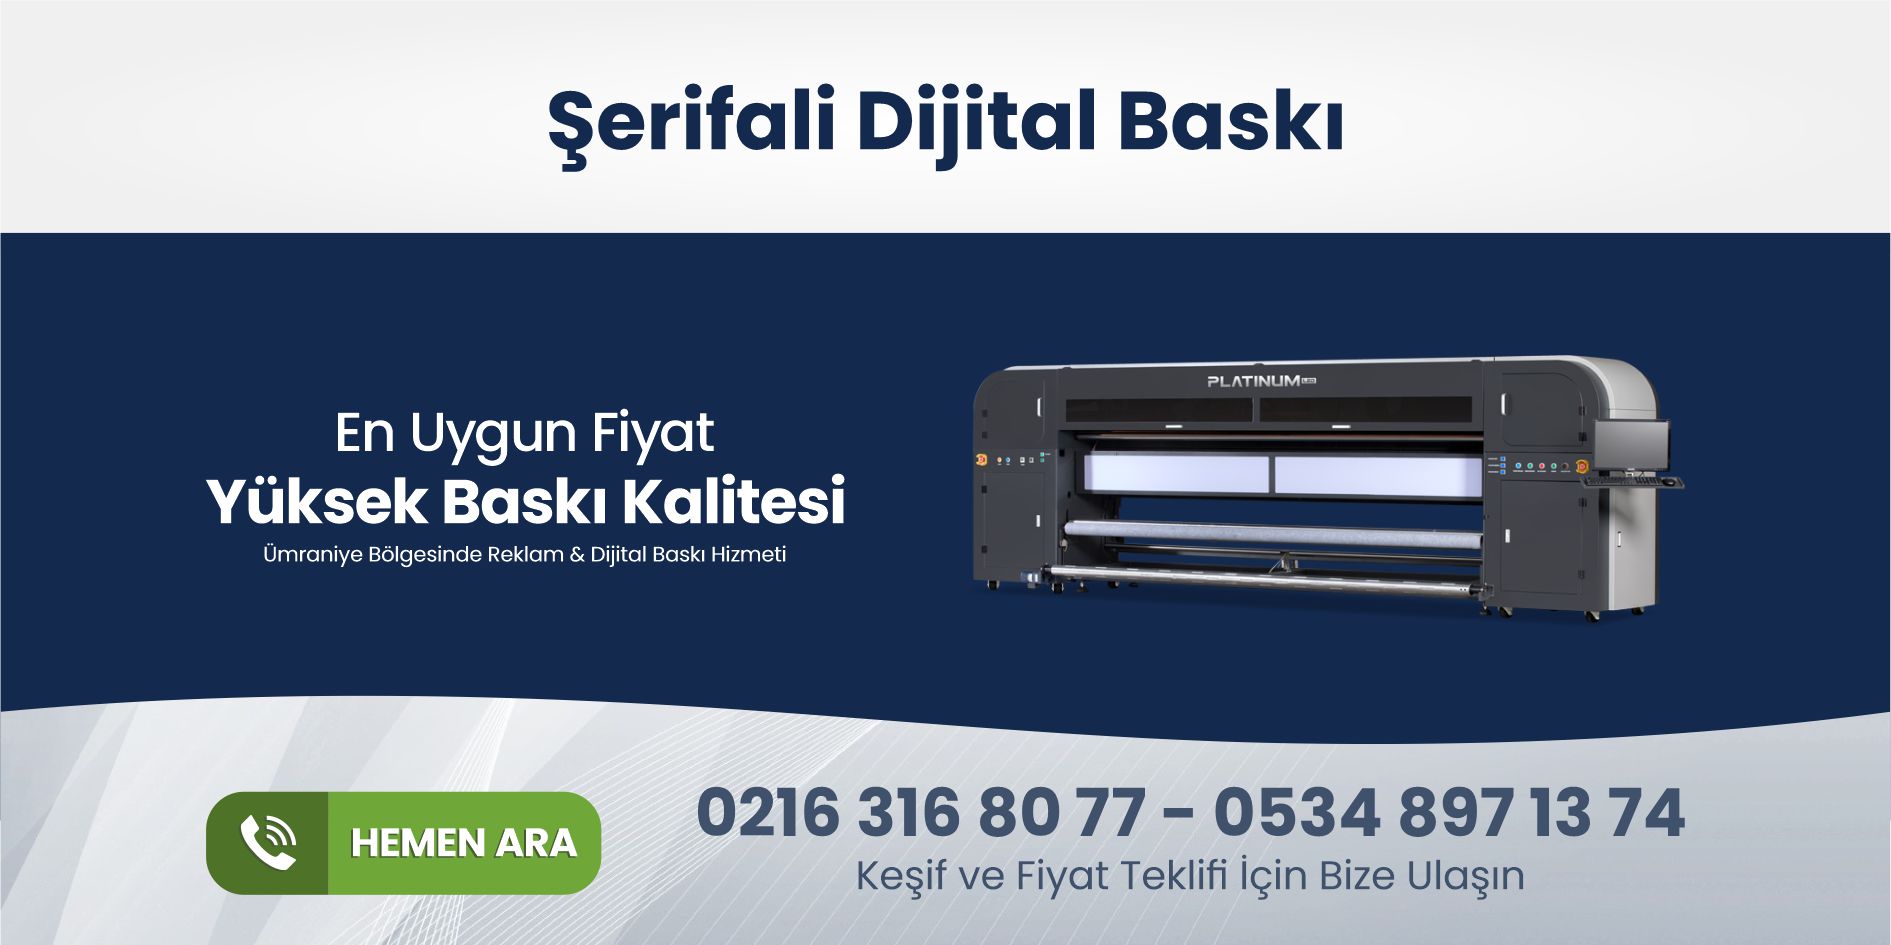 You are currently viewing Şerifali Dijital Baskı